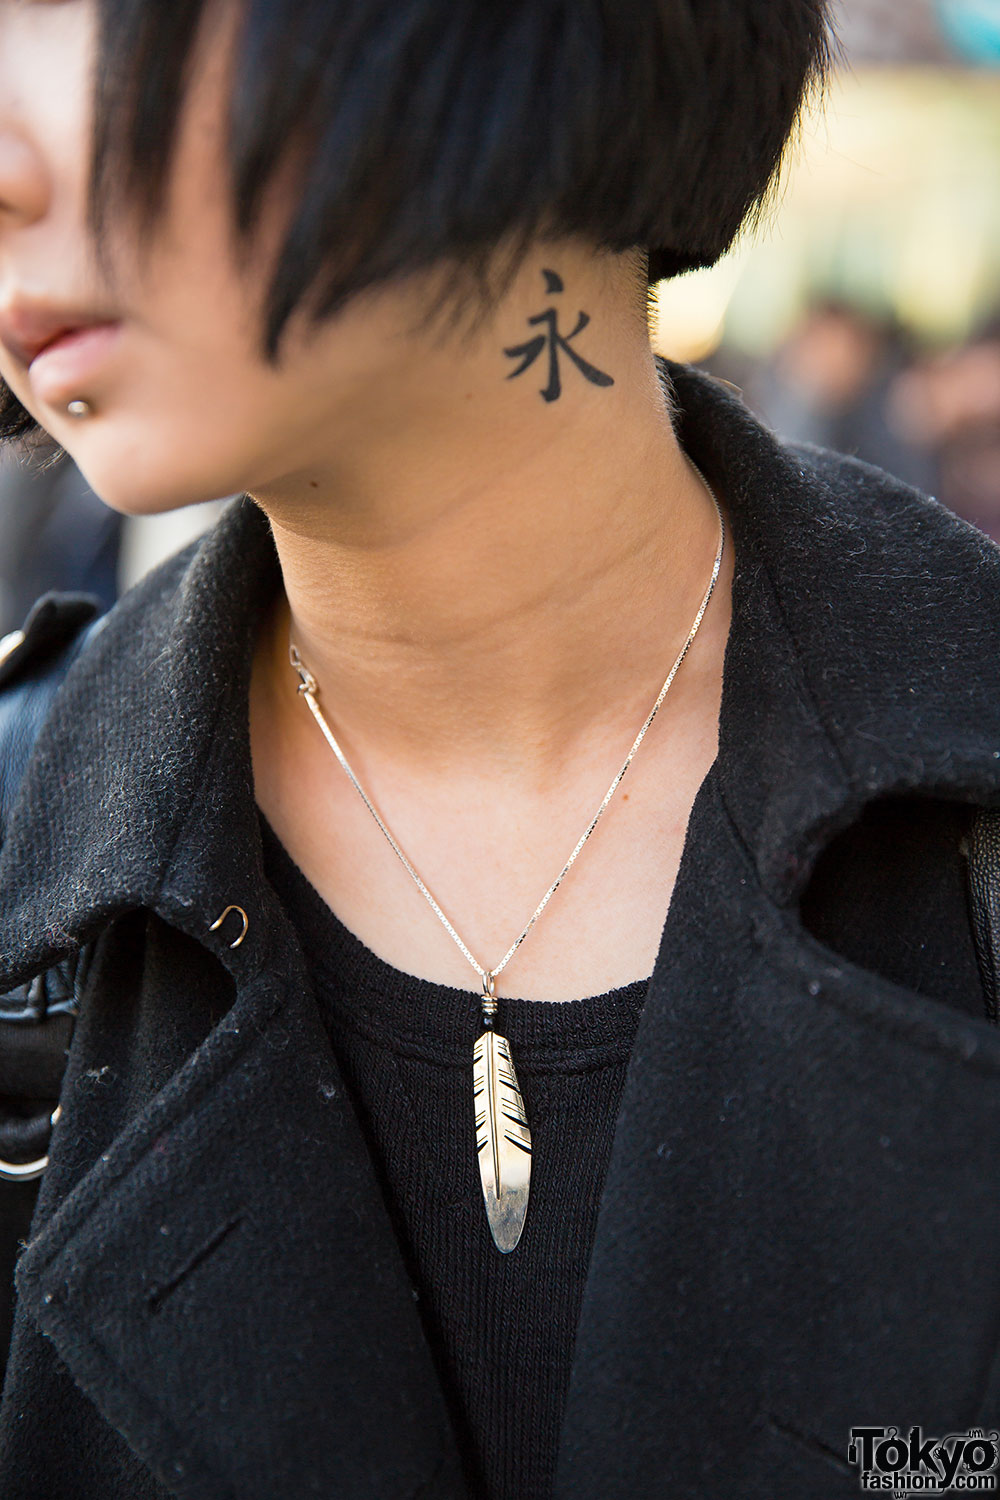 Women necklace choker tattoo on neck | Womens necklaces, Choker necklace,  Hoop earrings